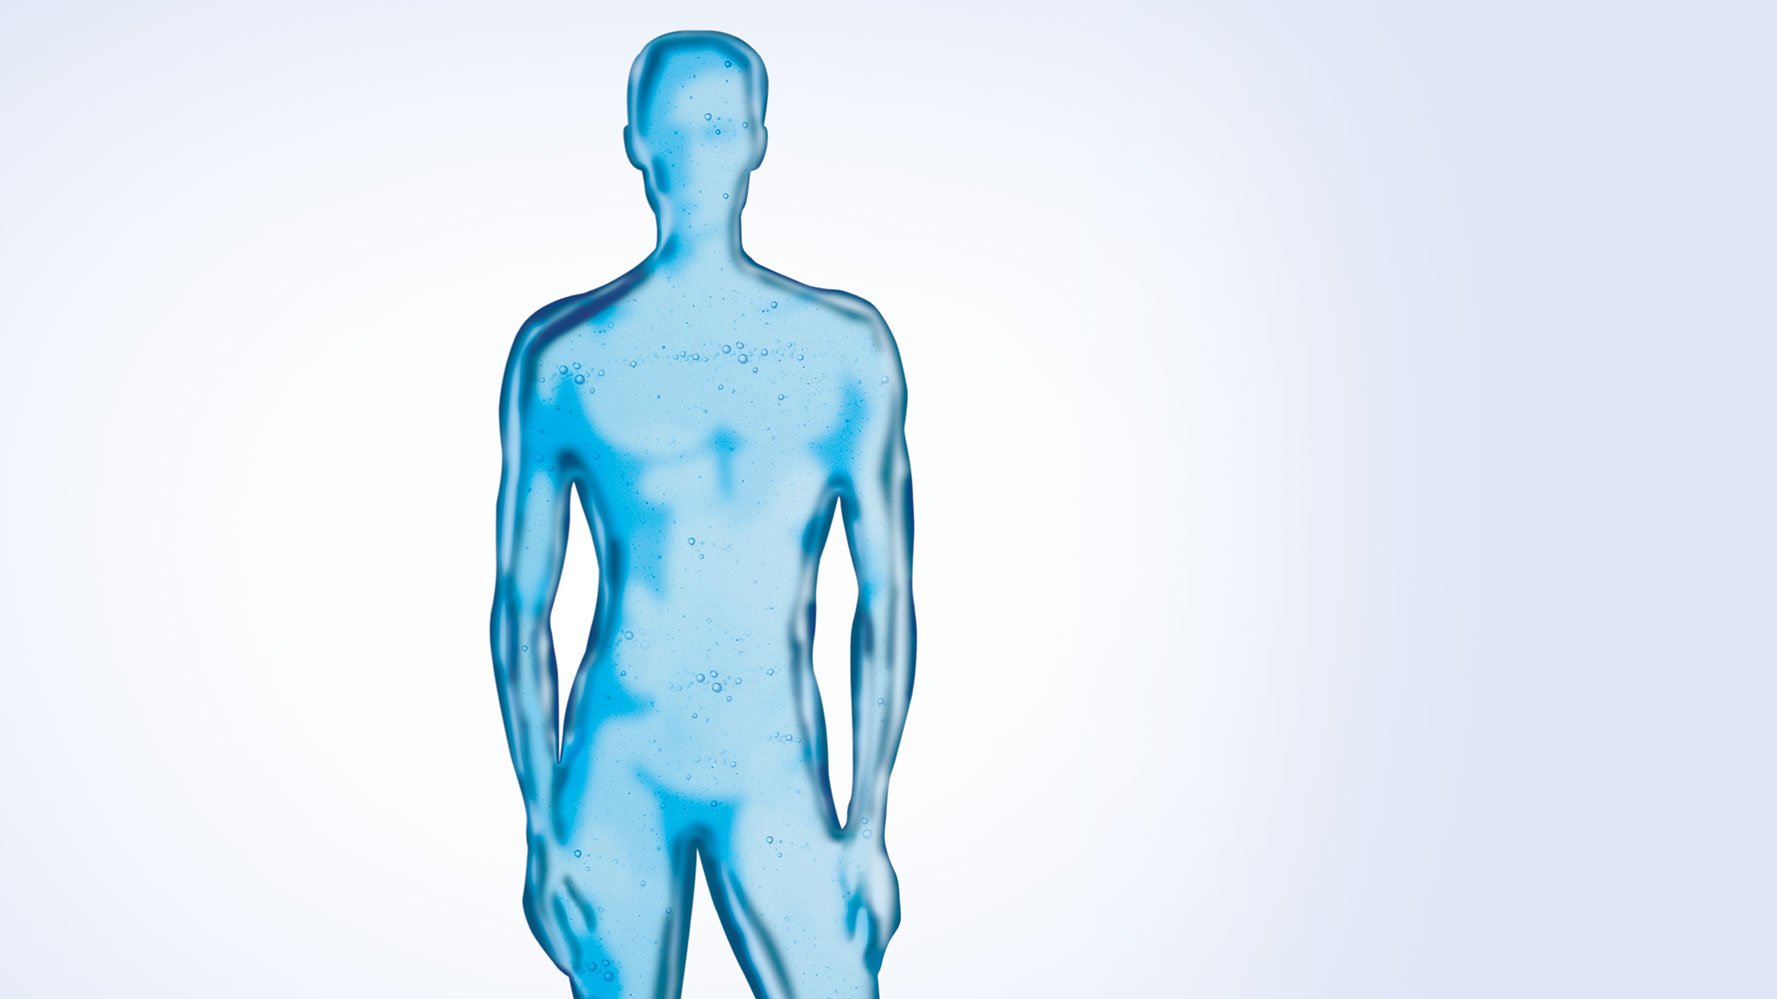 Transparan mavi bir adamın silüeti